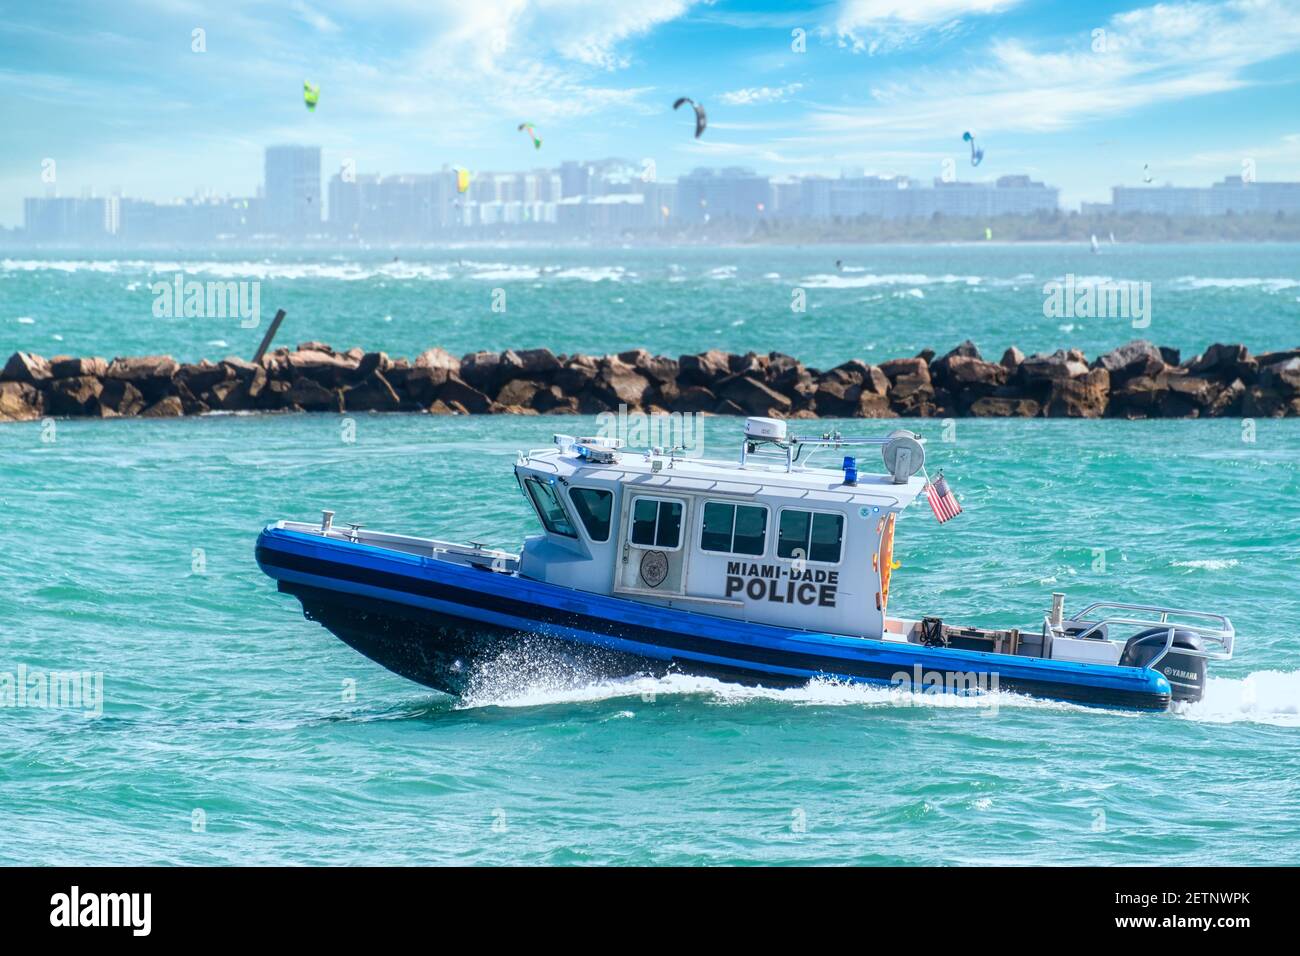 Water patrol of the Miami-Dade Police, Florida, USA Stock Photo